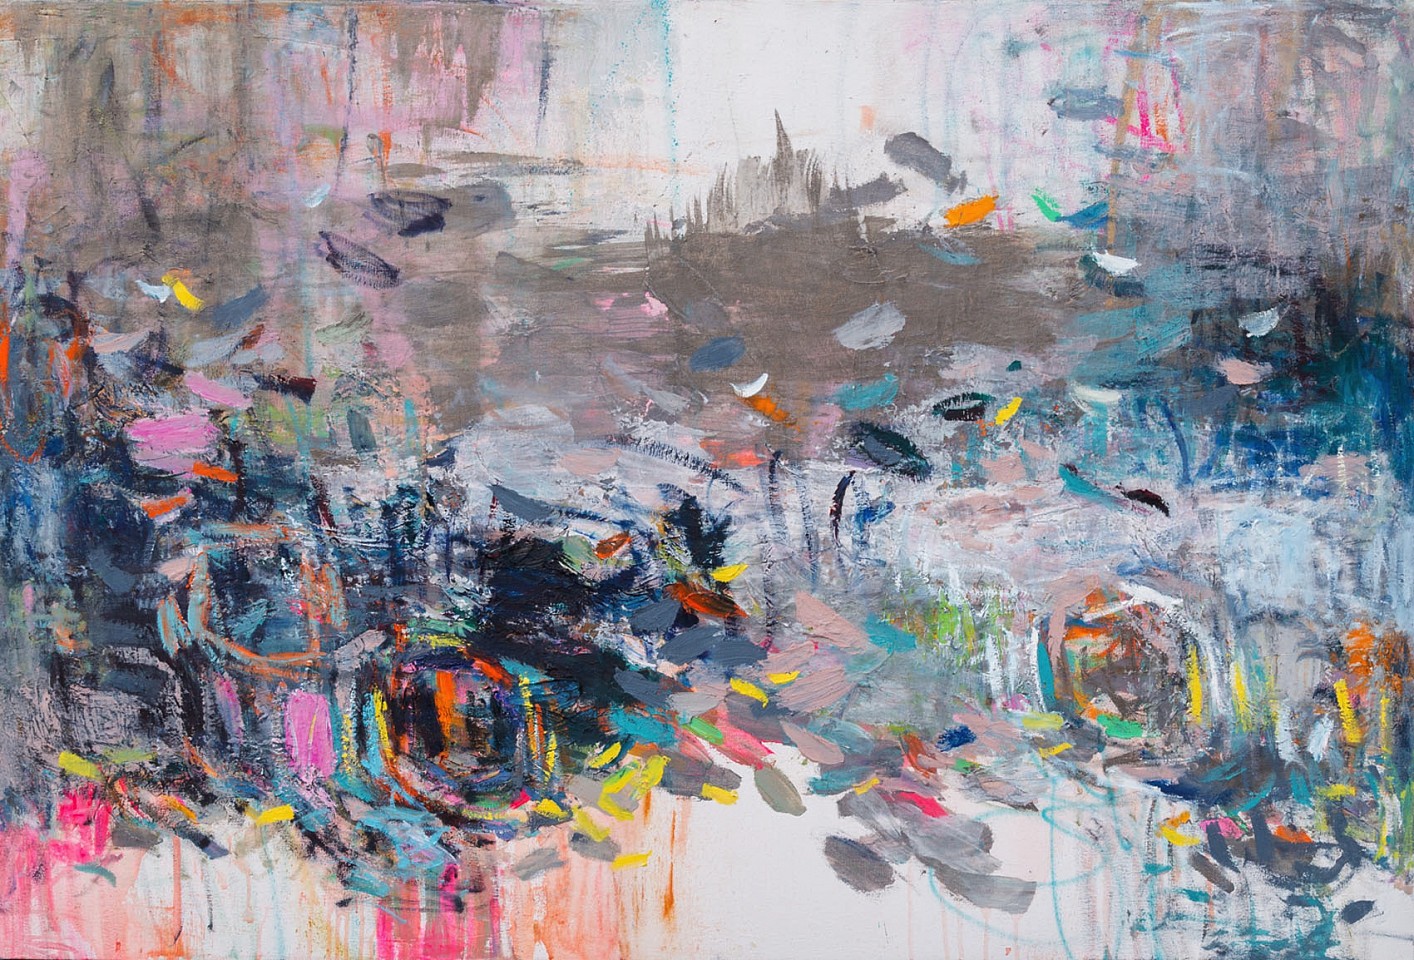 Amy Donaldson, Spirit Move, 2021
oil on canvas, 36" x 54"
AD 18
$6,500